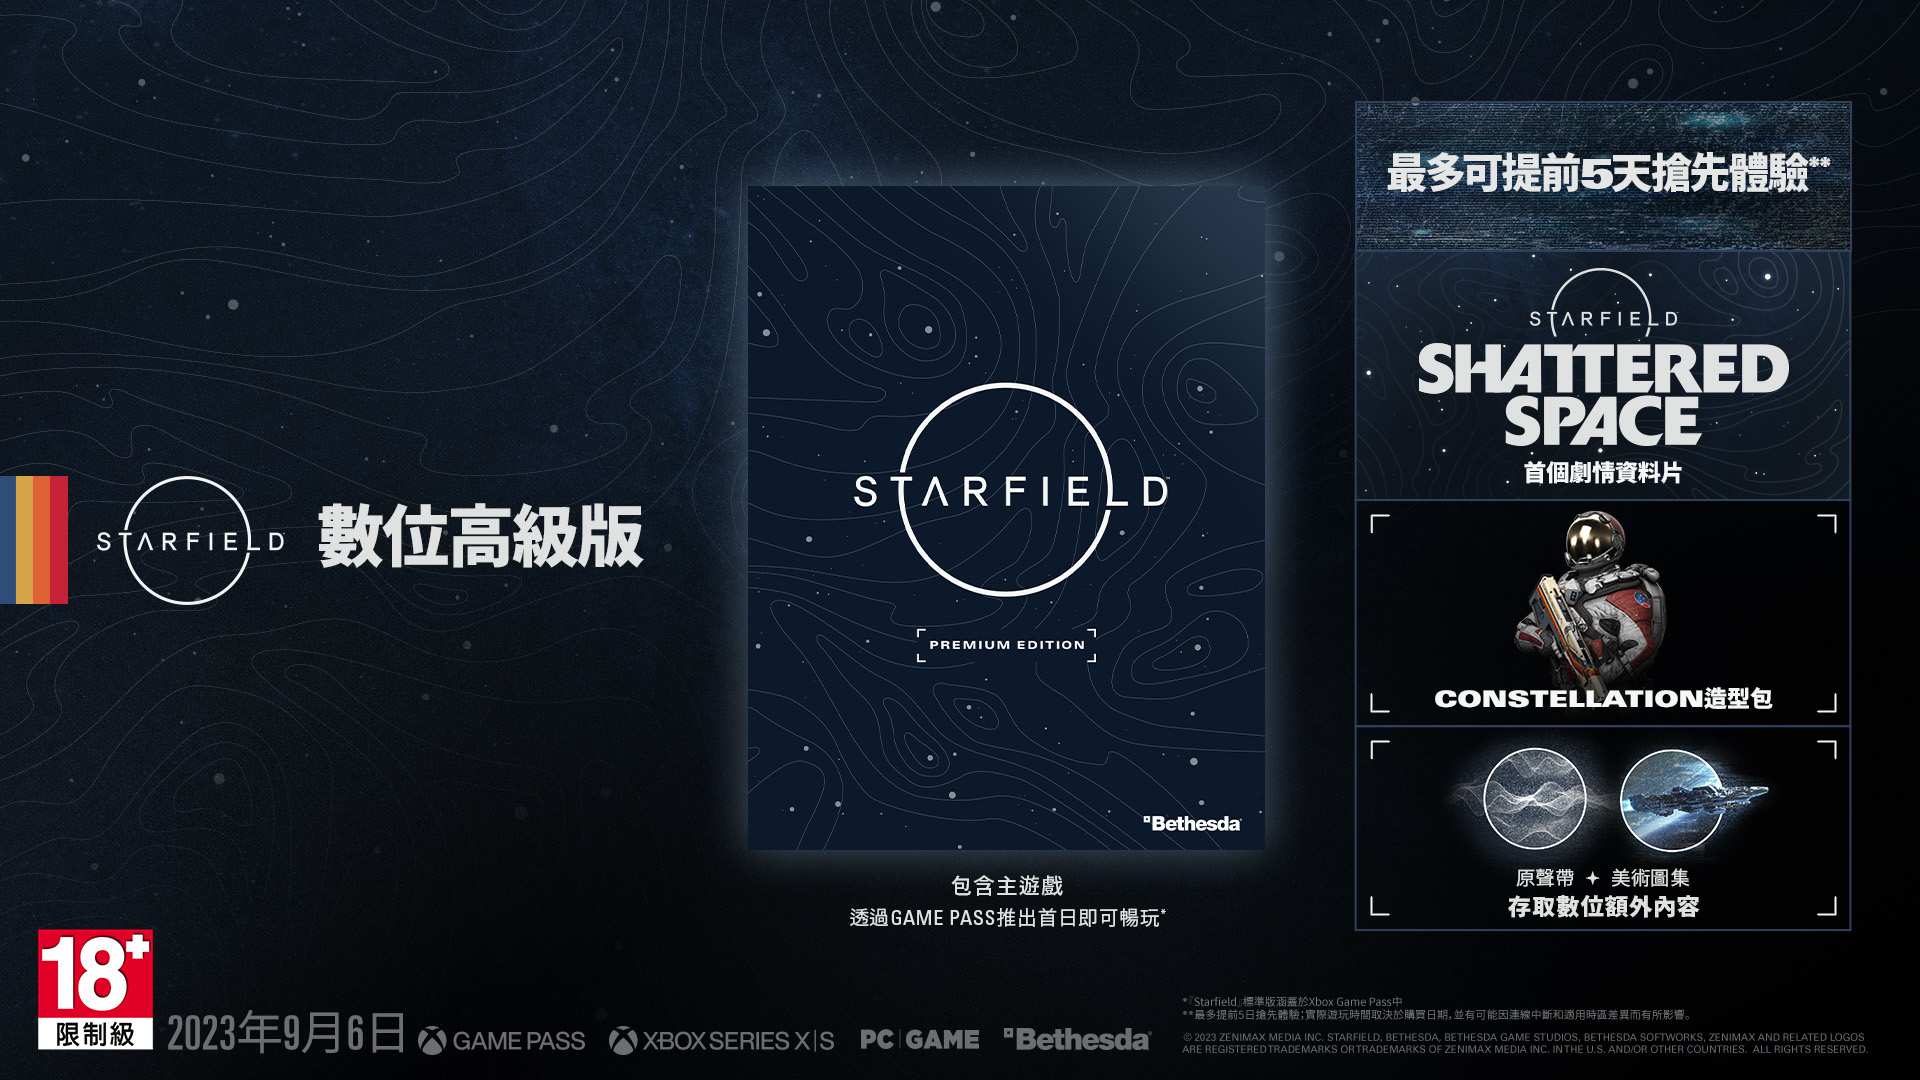 Starfield》預購獎勵、Constellation版以及搶先體驗的詳細資訊